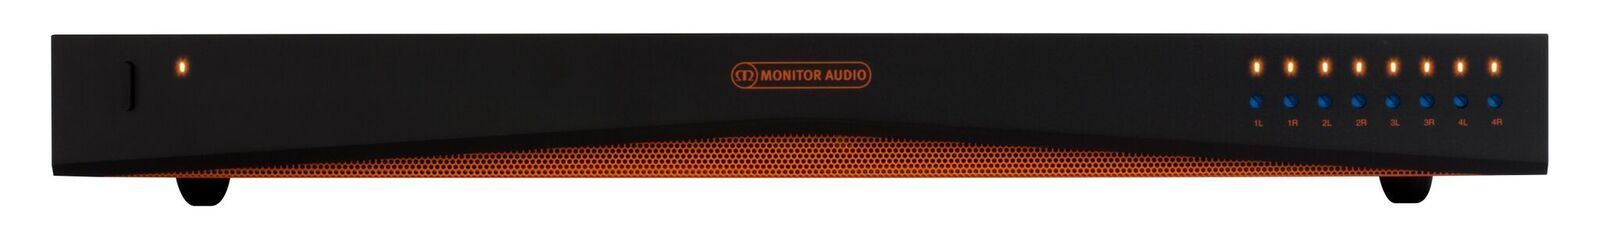 Monitor Audio IA150-8C power amplifier